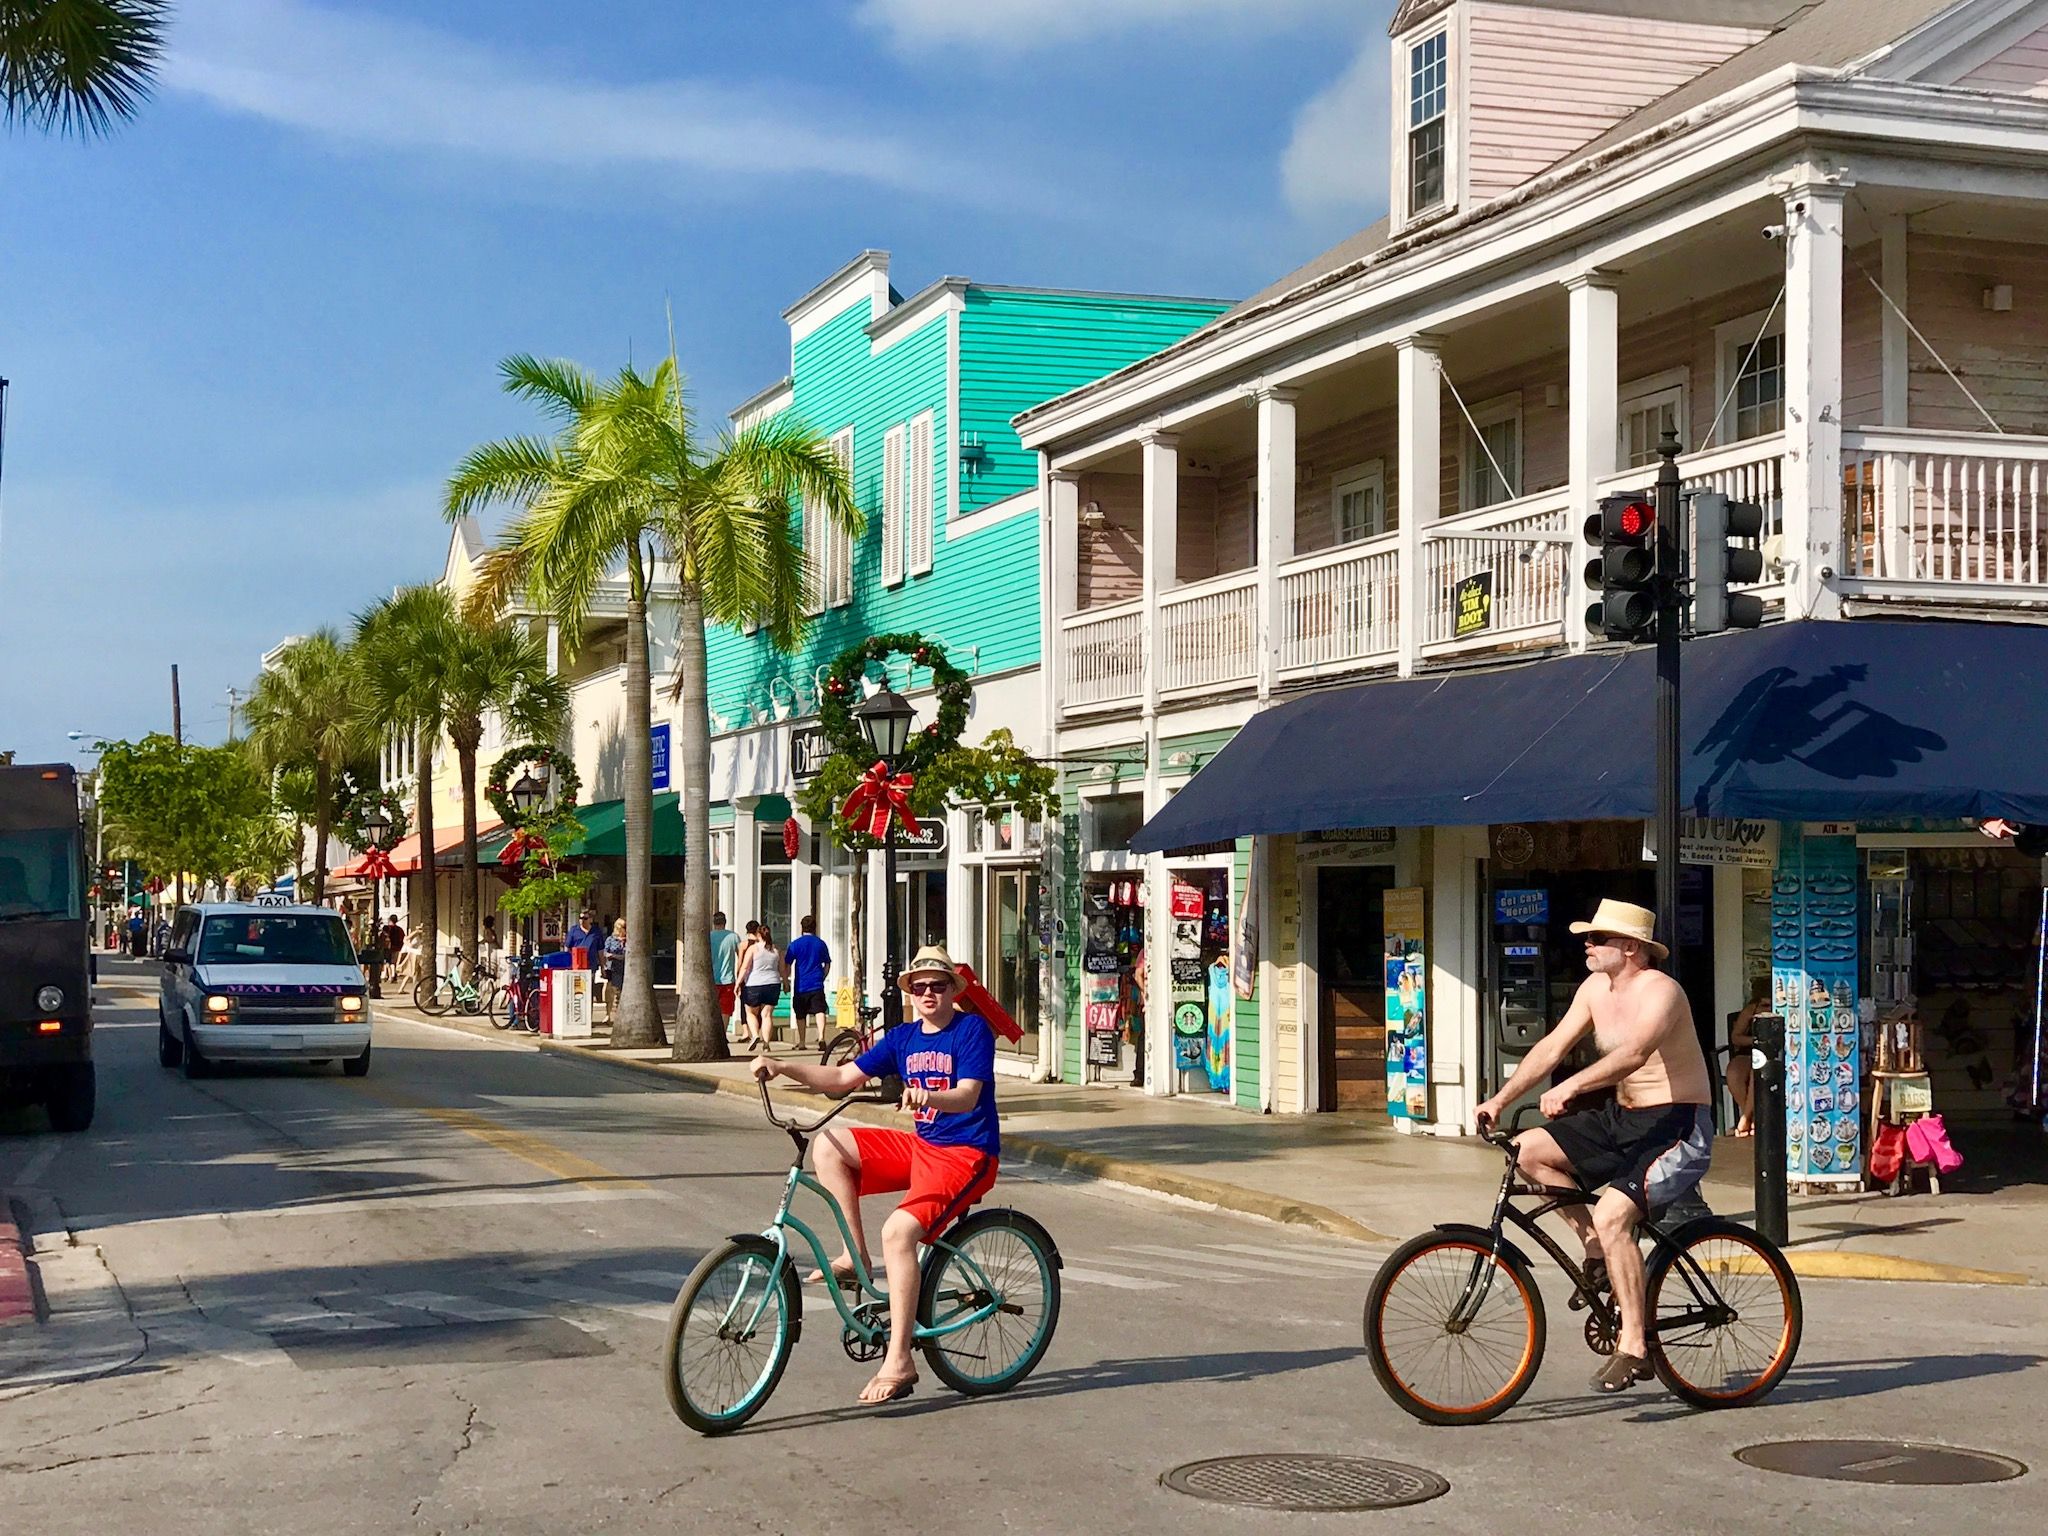 Florida Keys om efteråret: en perfekt solrig destination fra november! Foto: Sascha Tegtmeyer 5. Florida - varm rejsedestination i oktober og november?